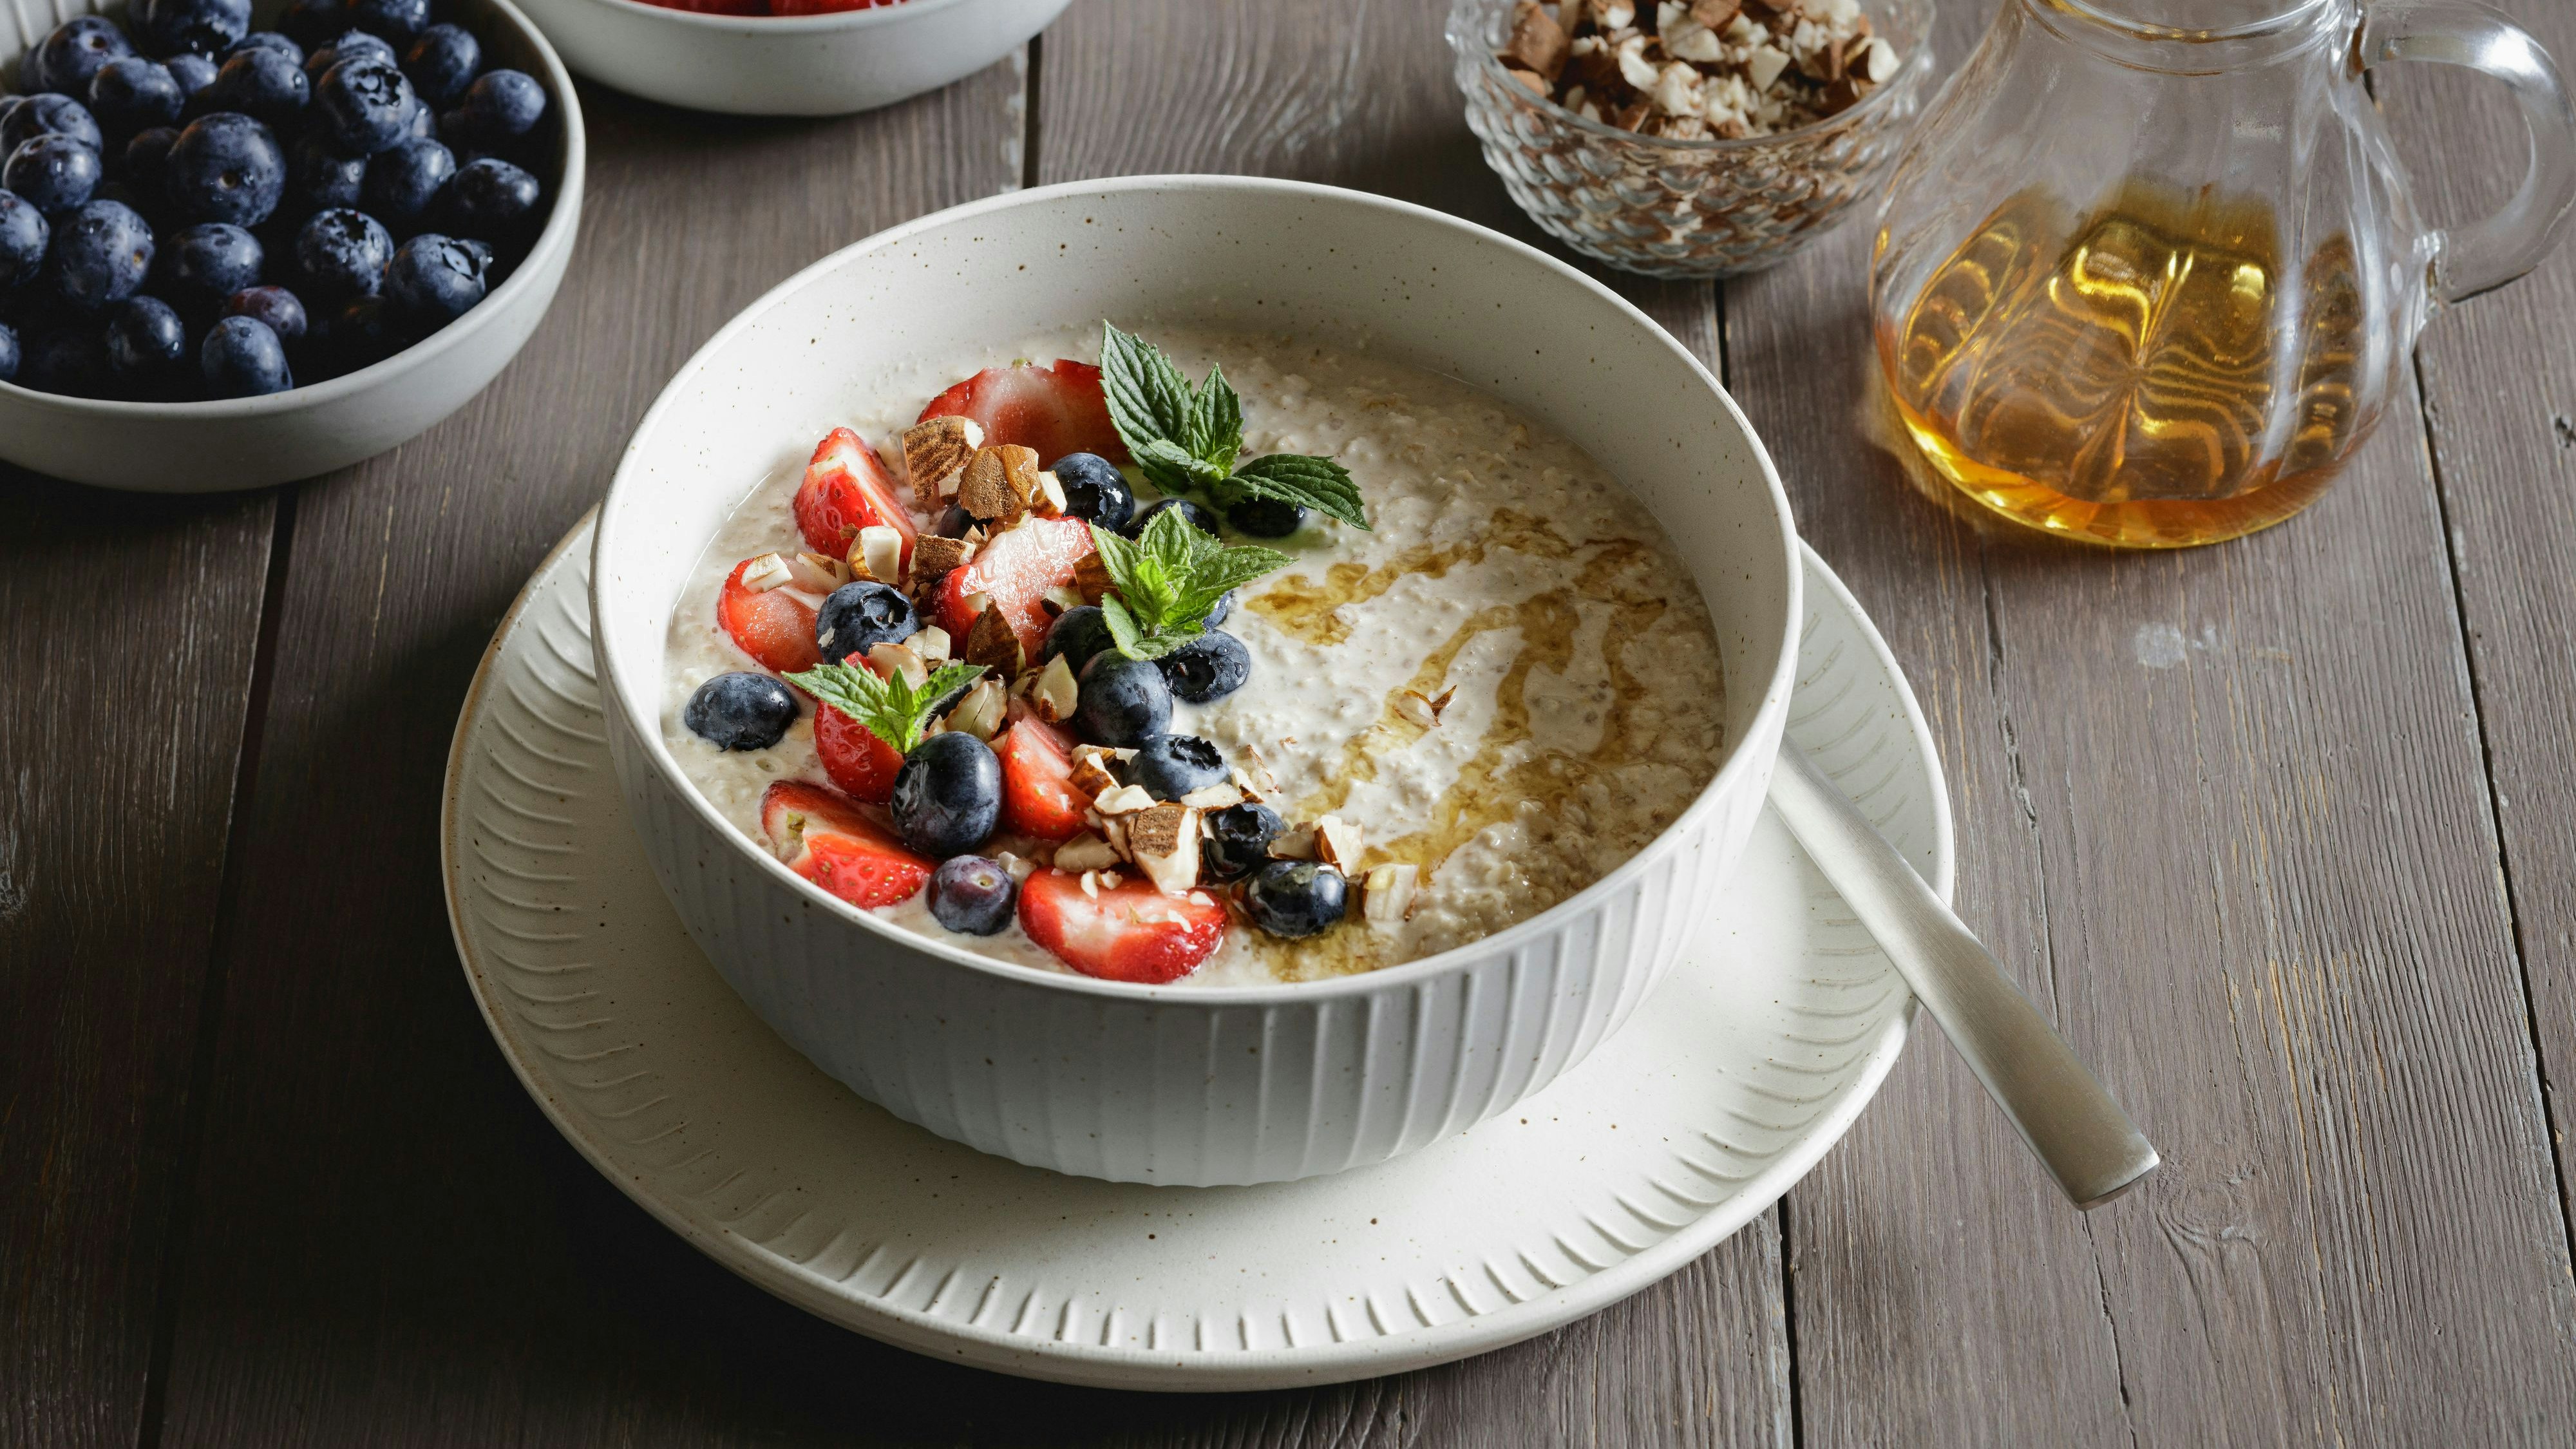 Beliebtes Powerfrühstück: Porridge, frische Beeren, Nüsse